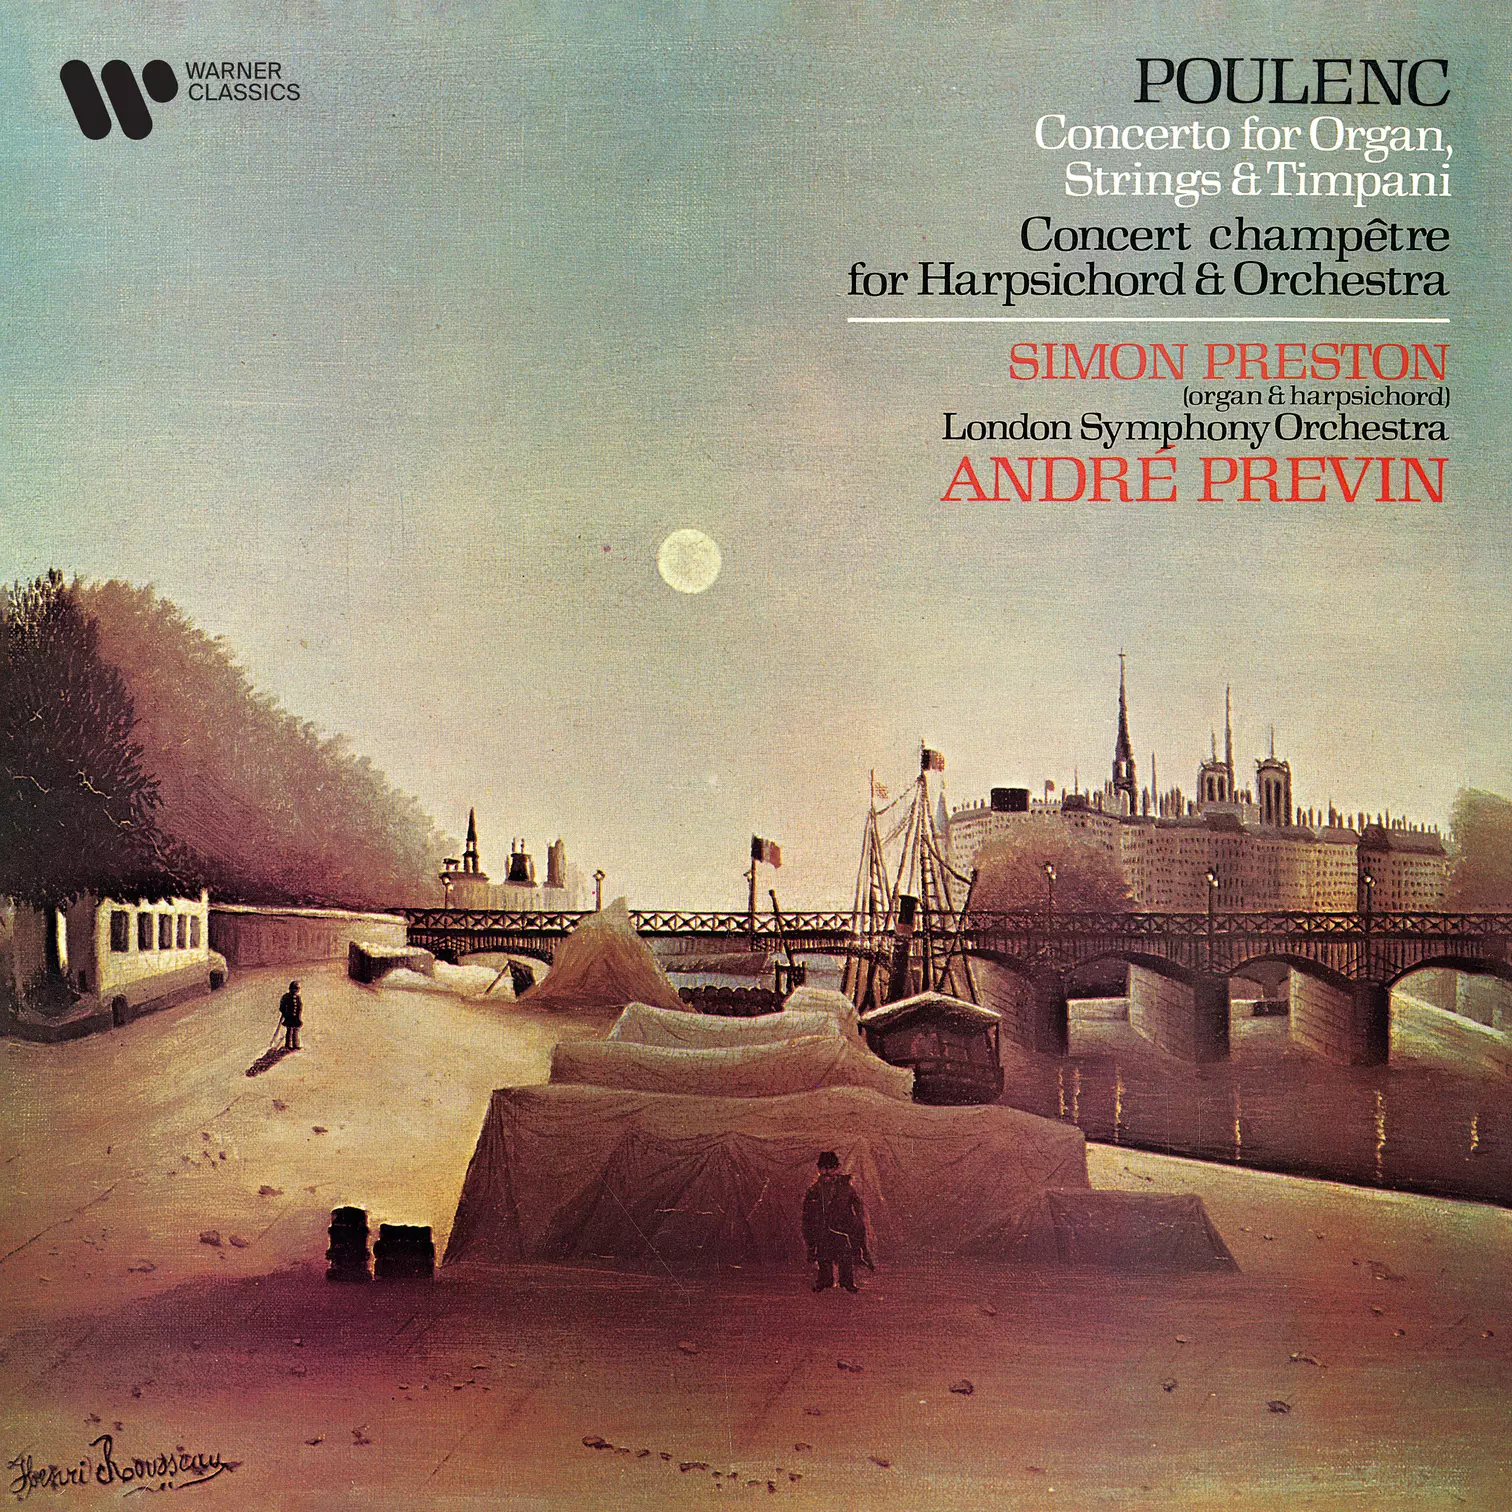 Poulenc: Concerto for Organ, Strings and Timpani & Concert champêtre